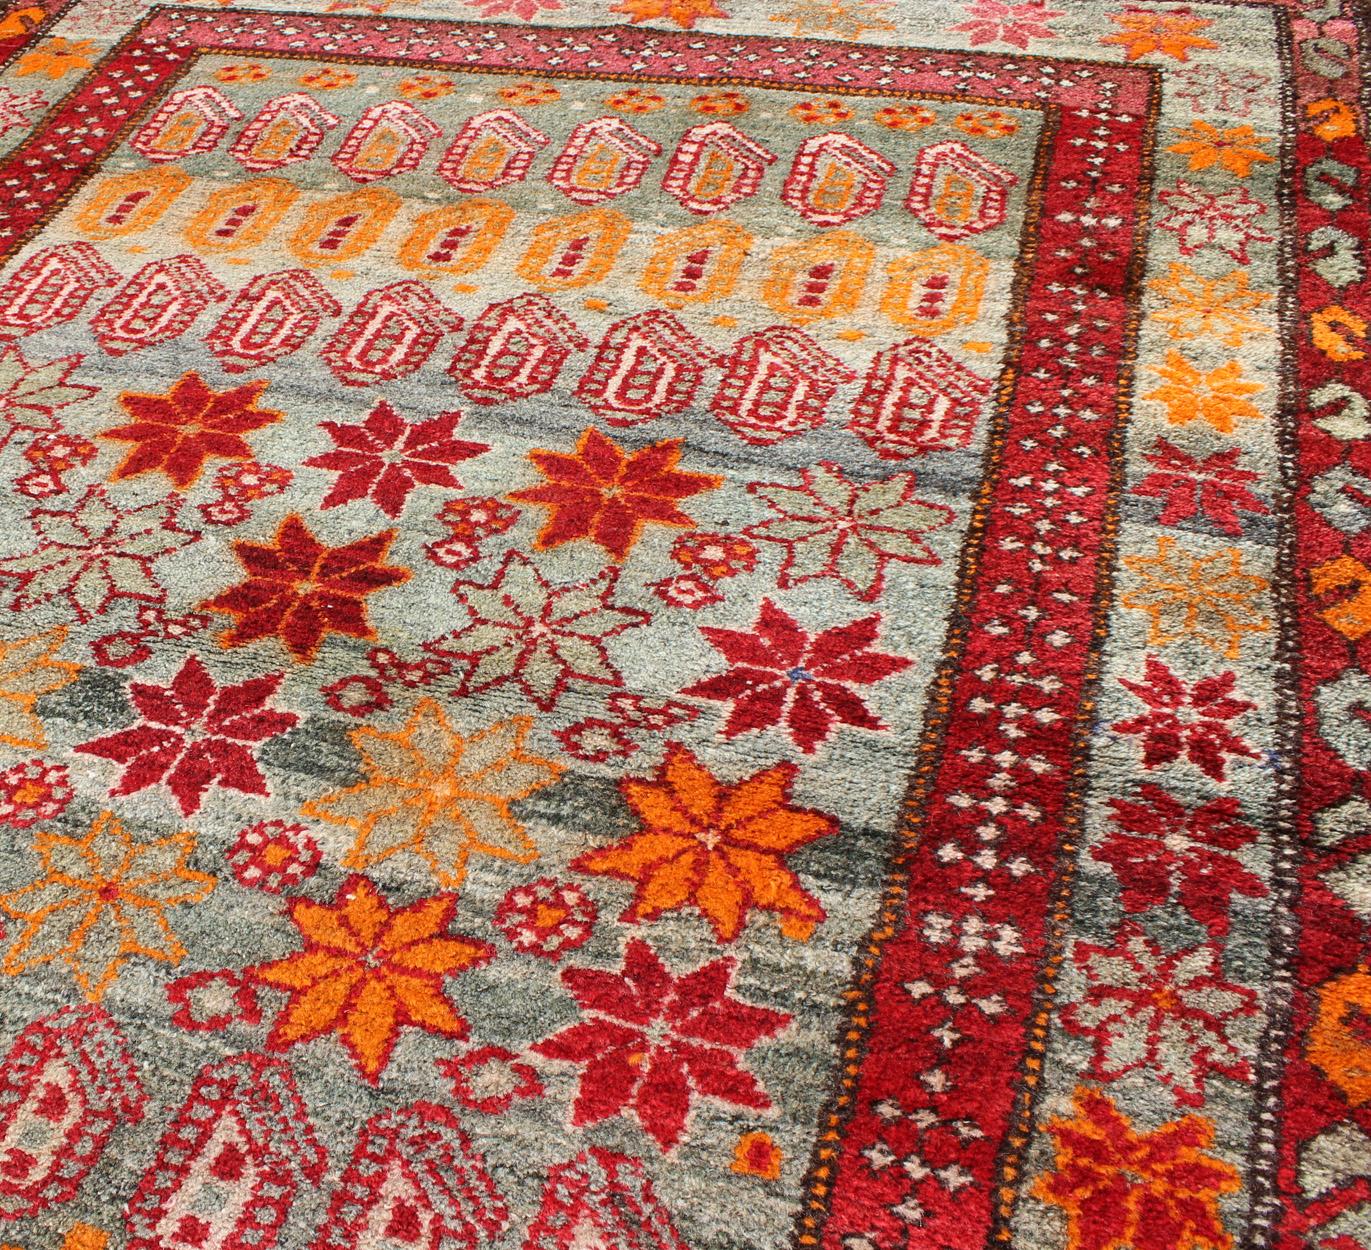 Colorful Vintage Persian Hamedan Rug with All-Over Motif Design For Sale 2